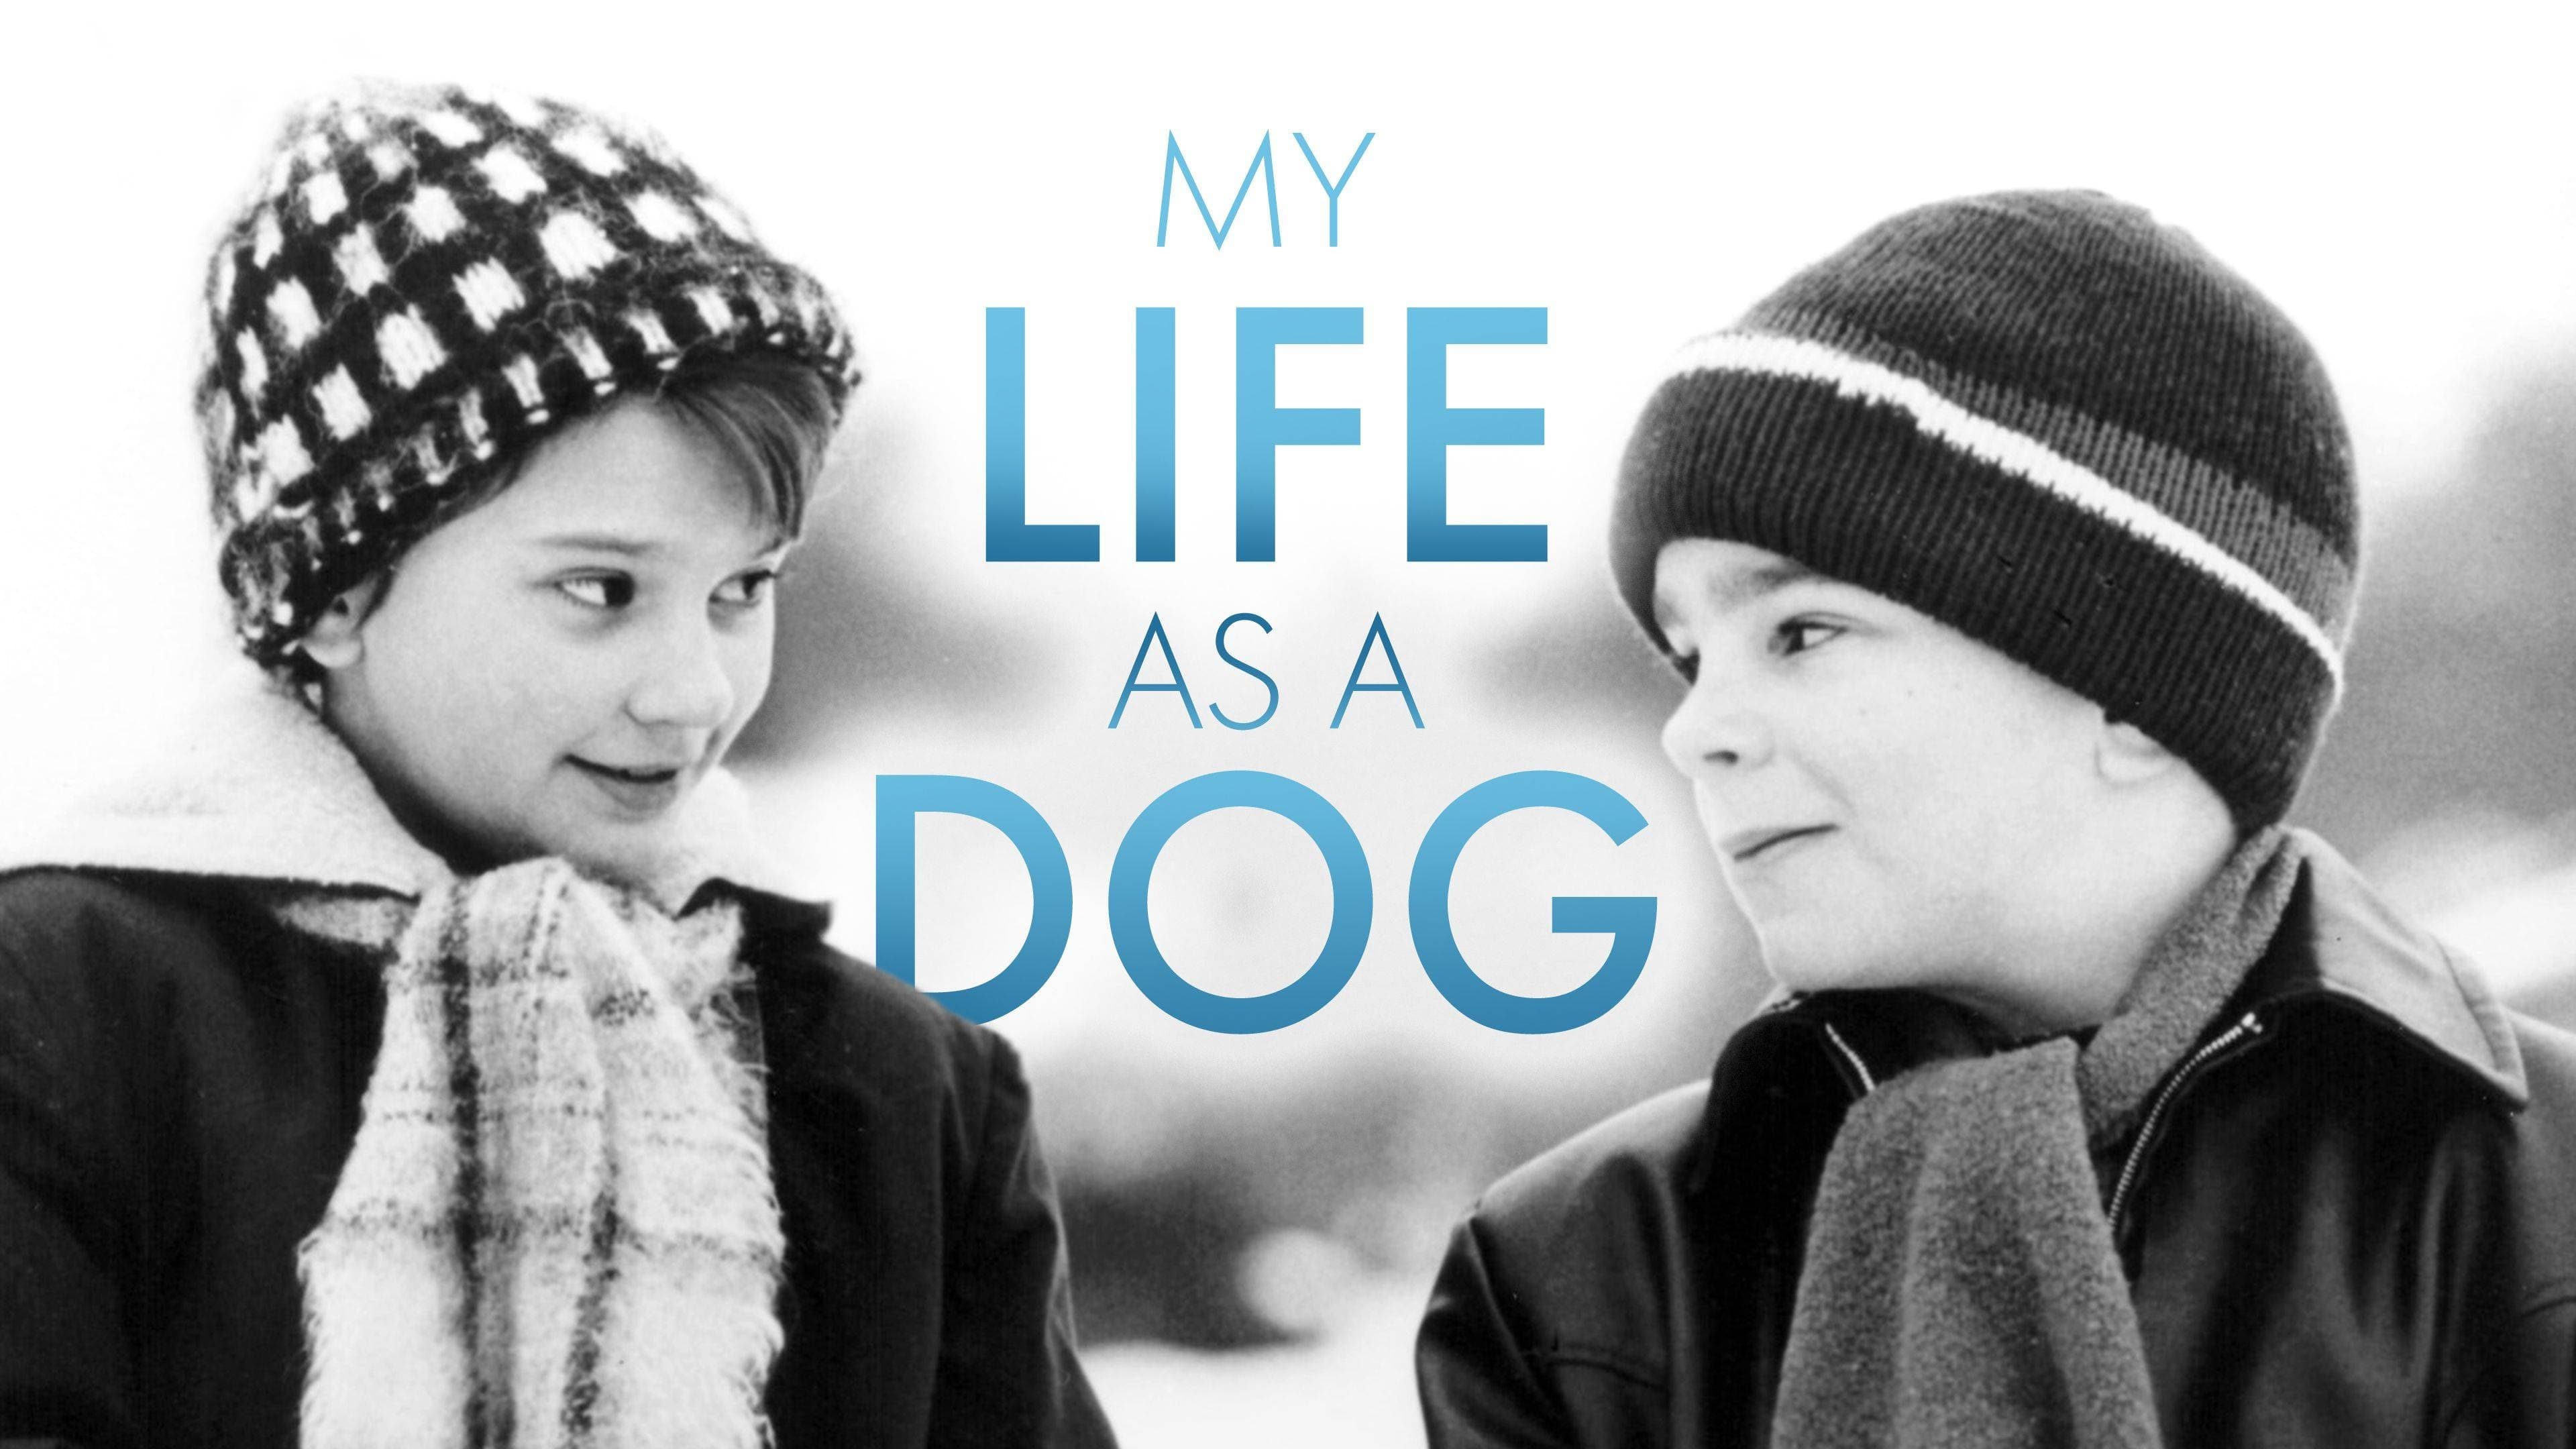 Mitt liv som hund (1985)